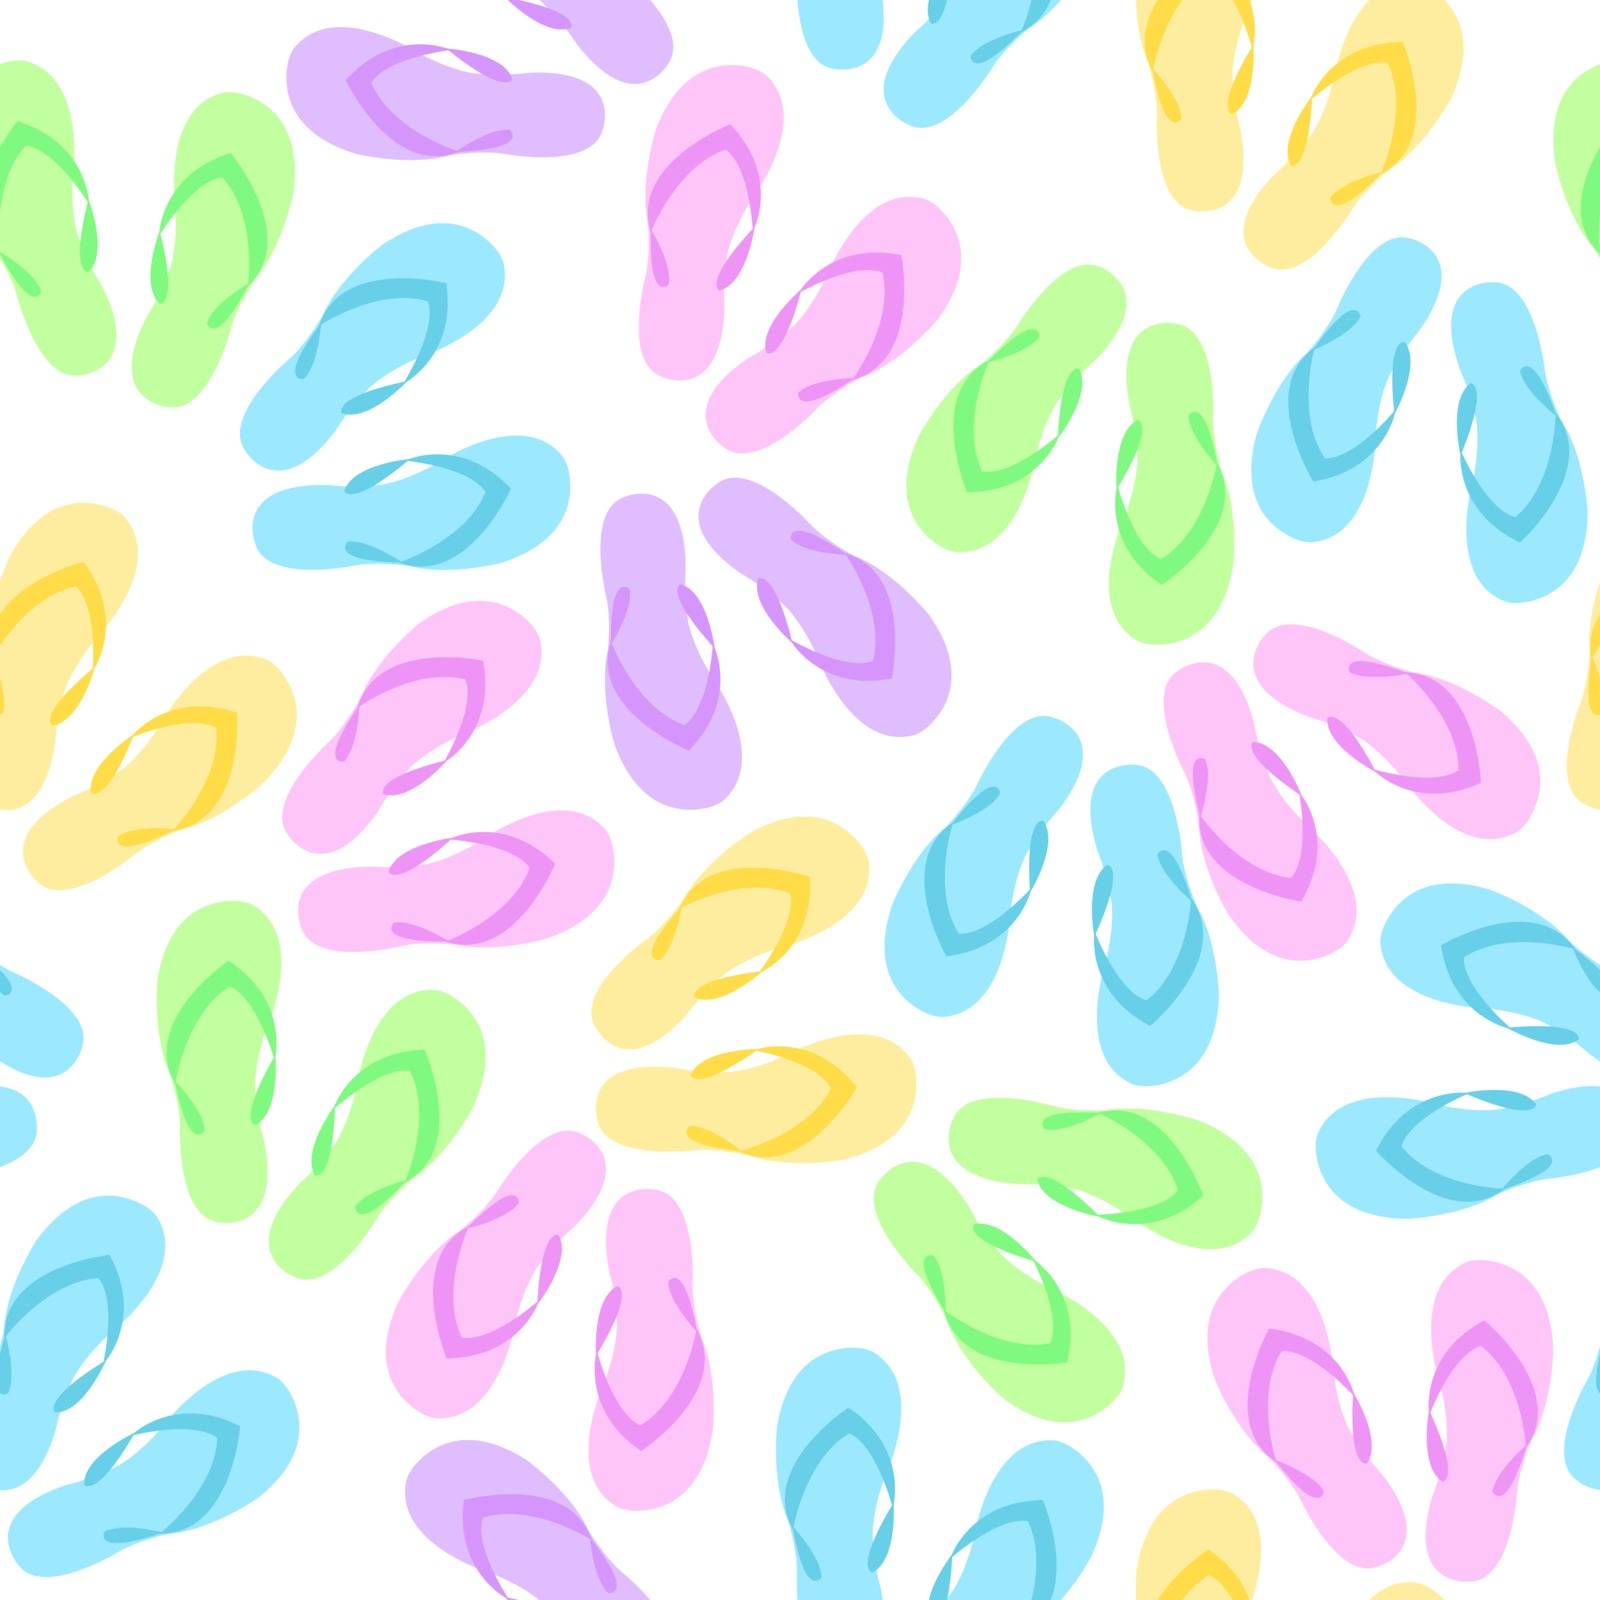 Flip Flops seamless texture, beach background. Summer texture vector illustration by lucia_fox